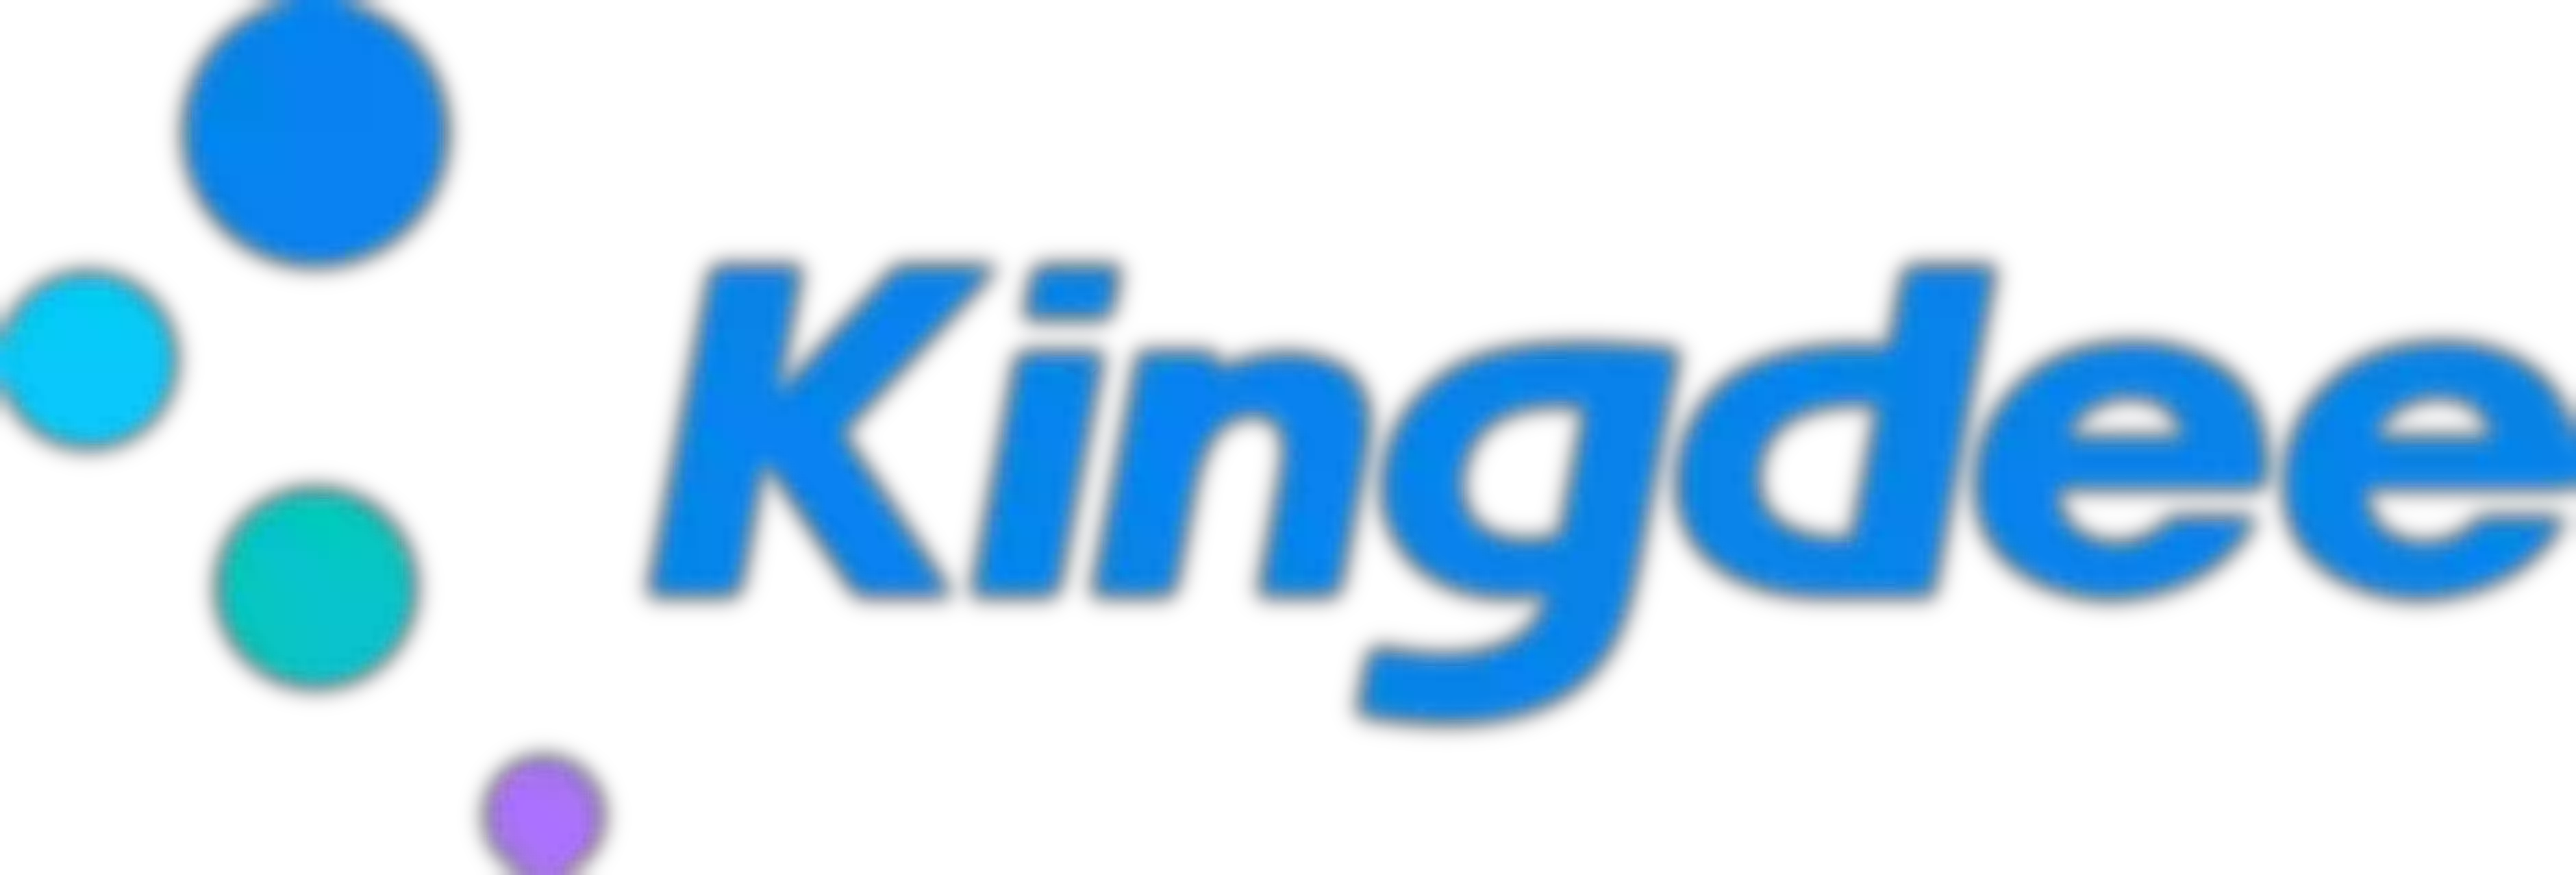 Kingdee logo